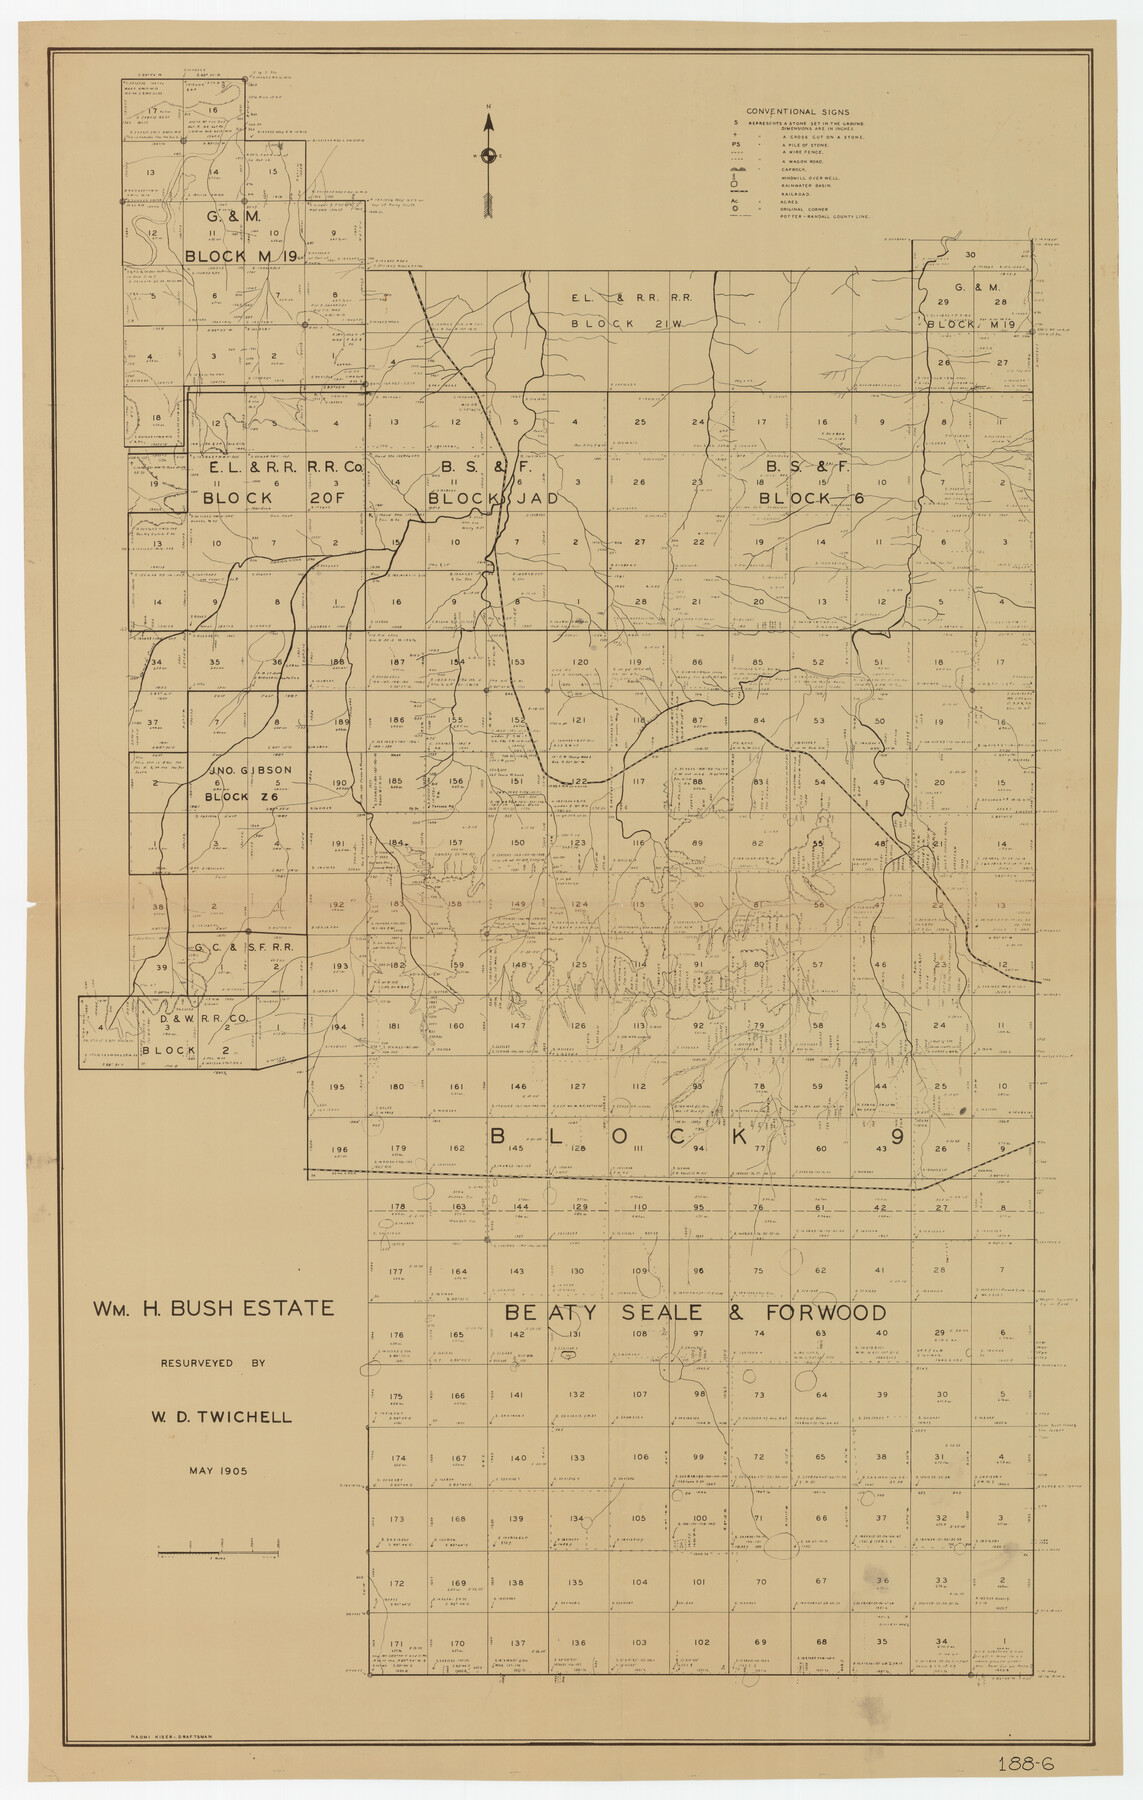 89784, Wm. H. Bush Estate resurveyed by W. D. Twichell May 1905, Twichell Survey Records